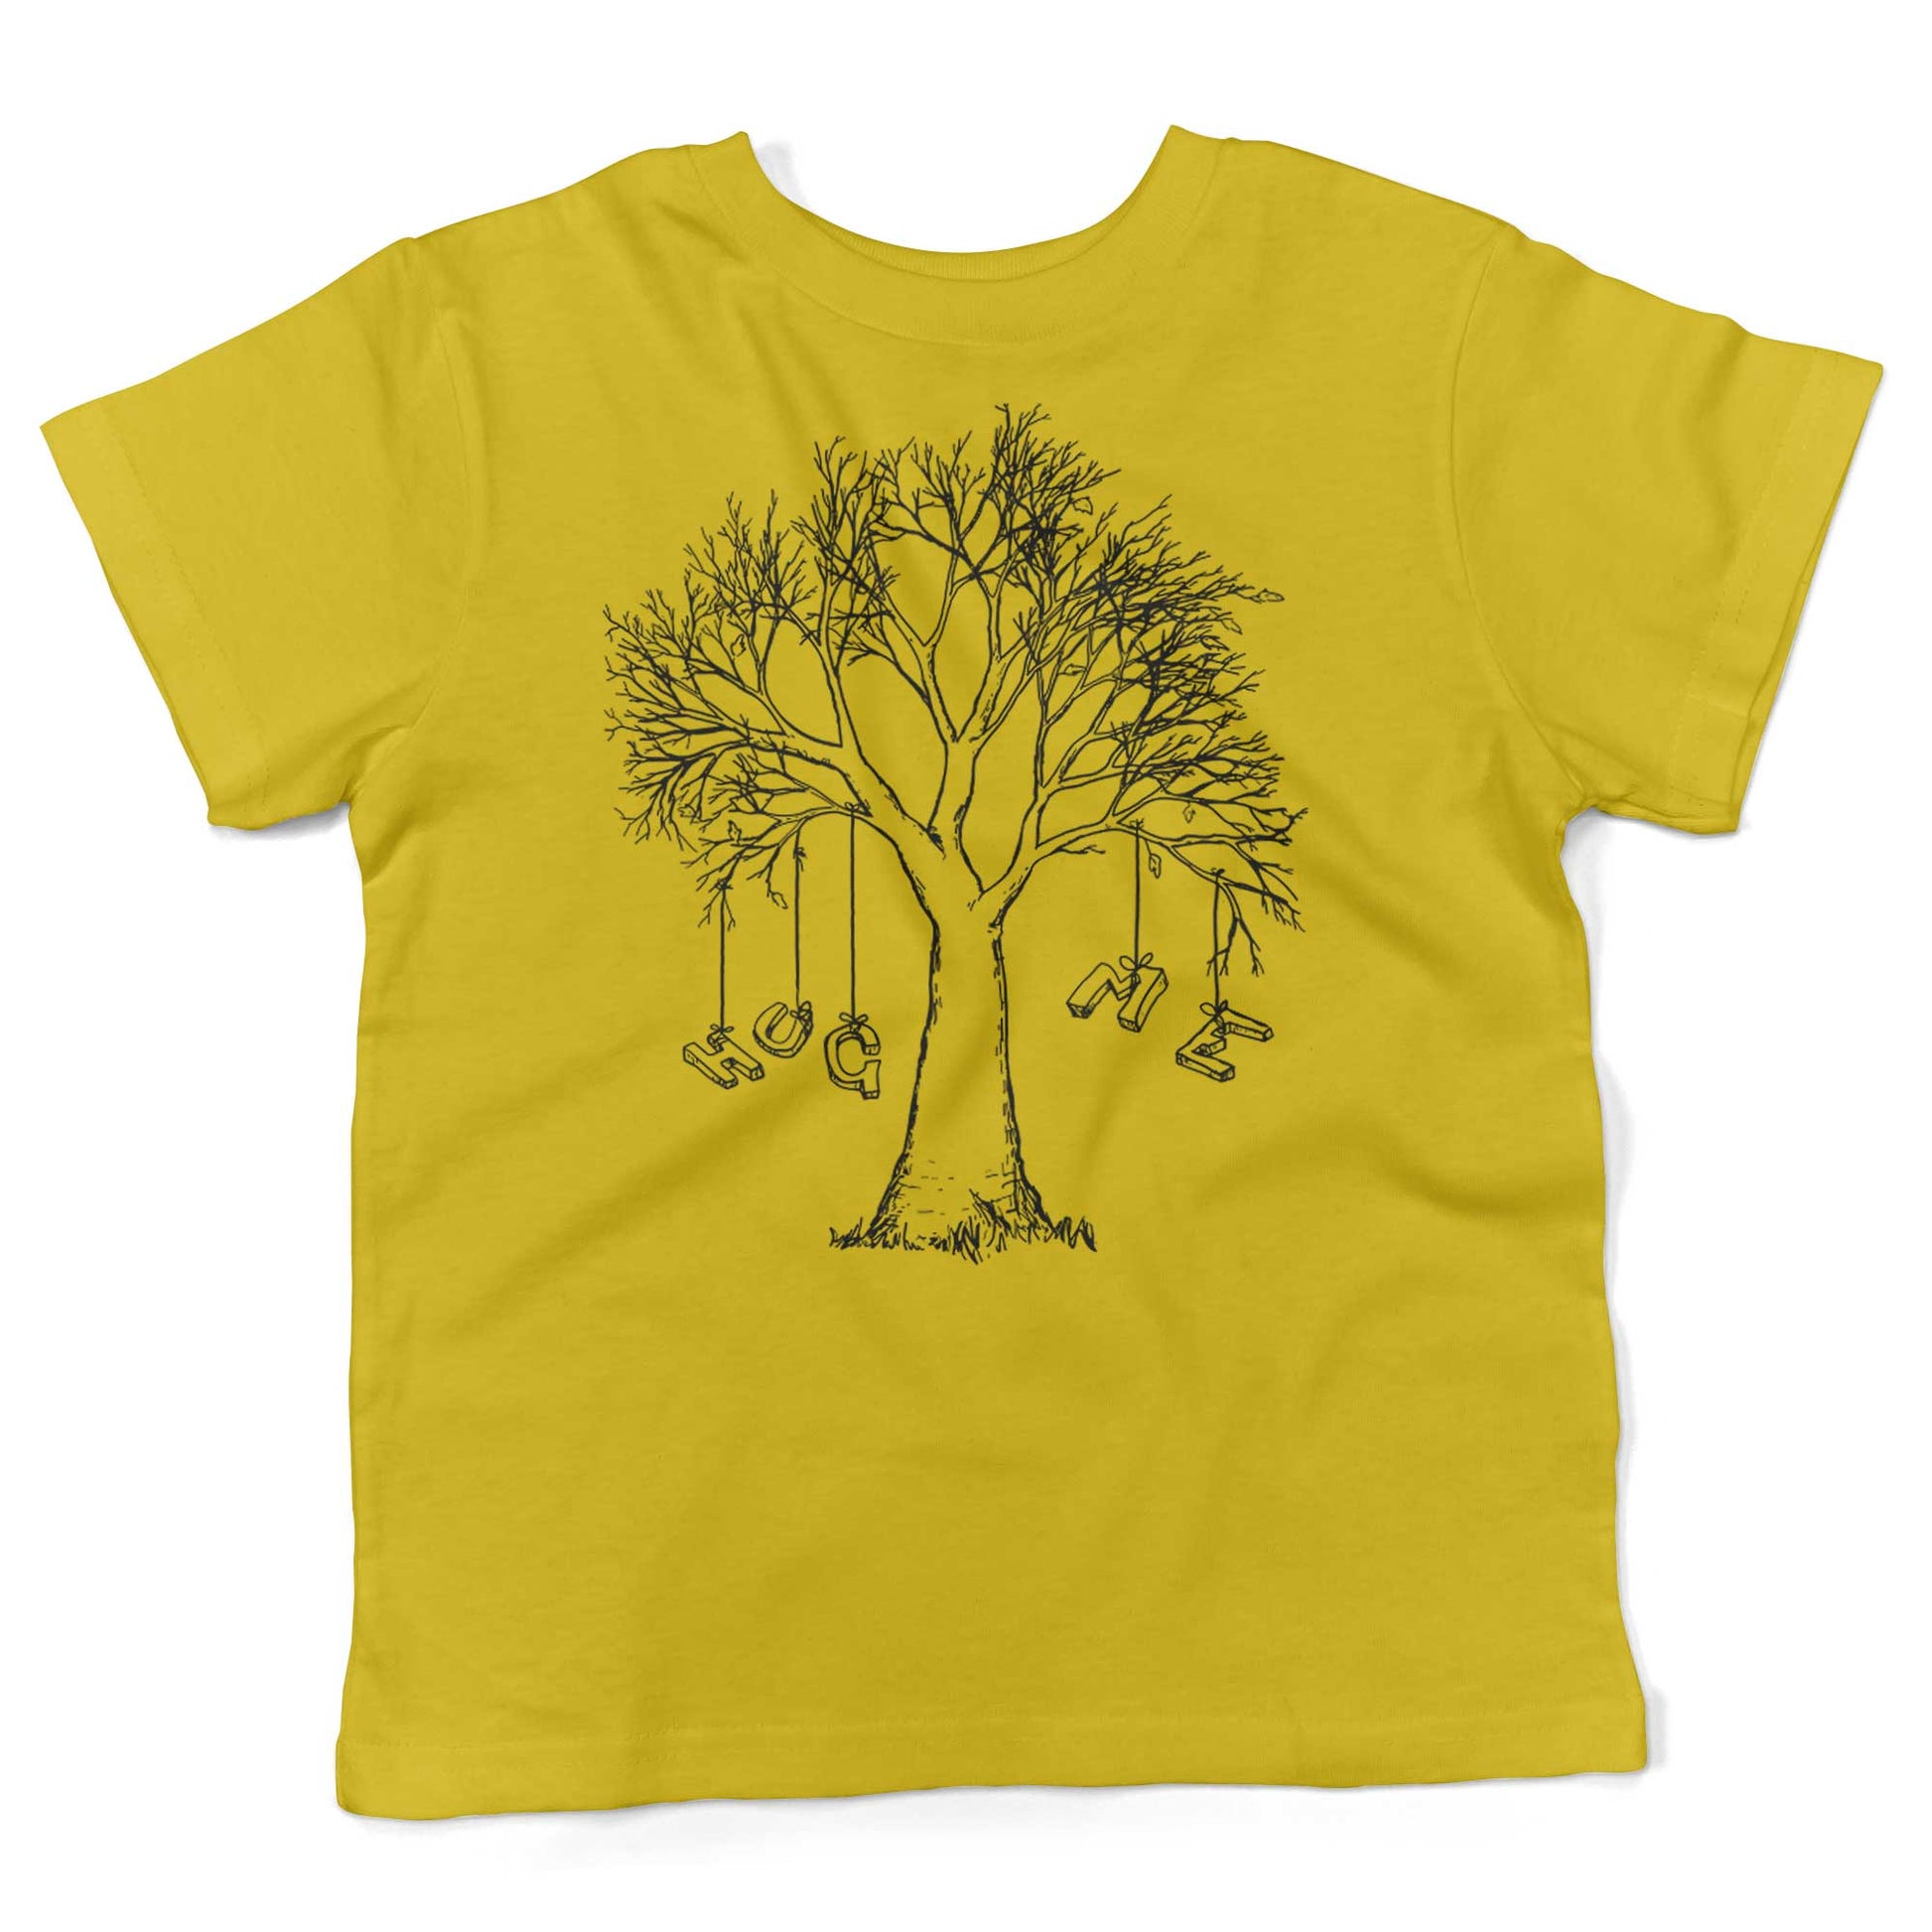 Hug A Tree Toddler Shirt-Sunshine Yellow-2T